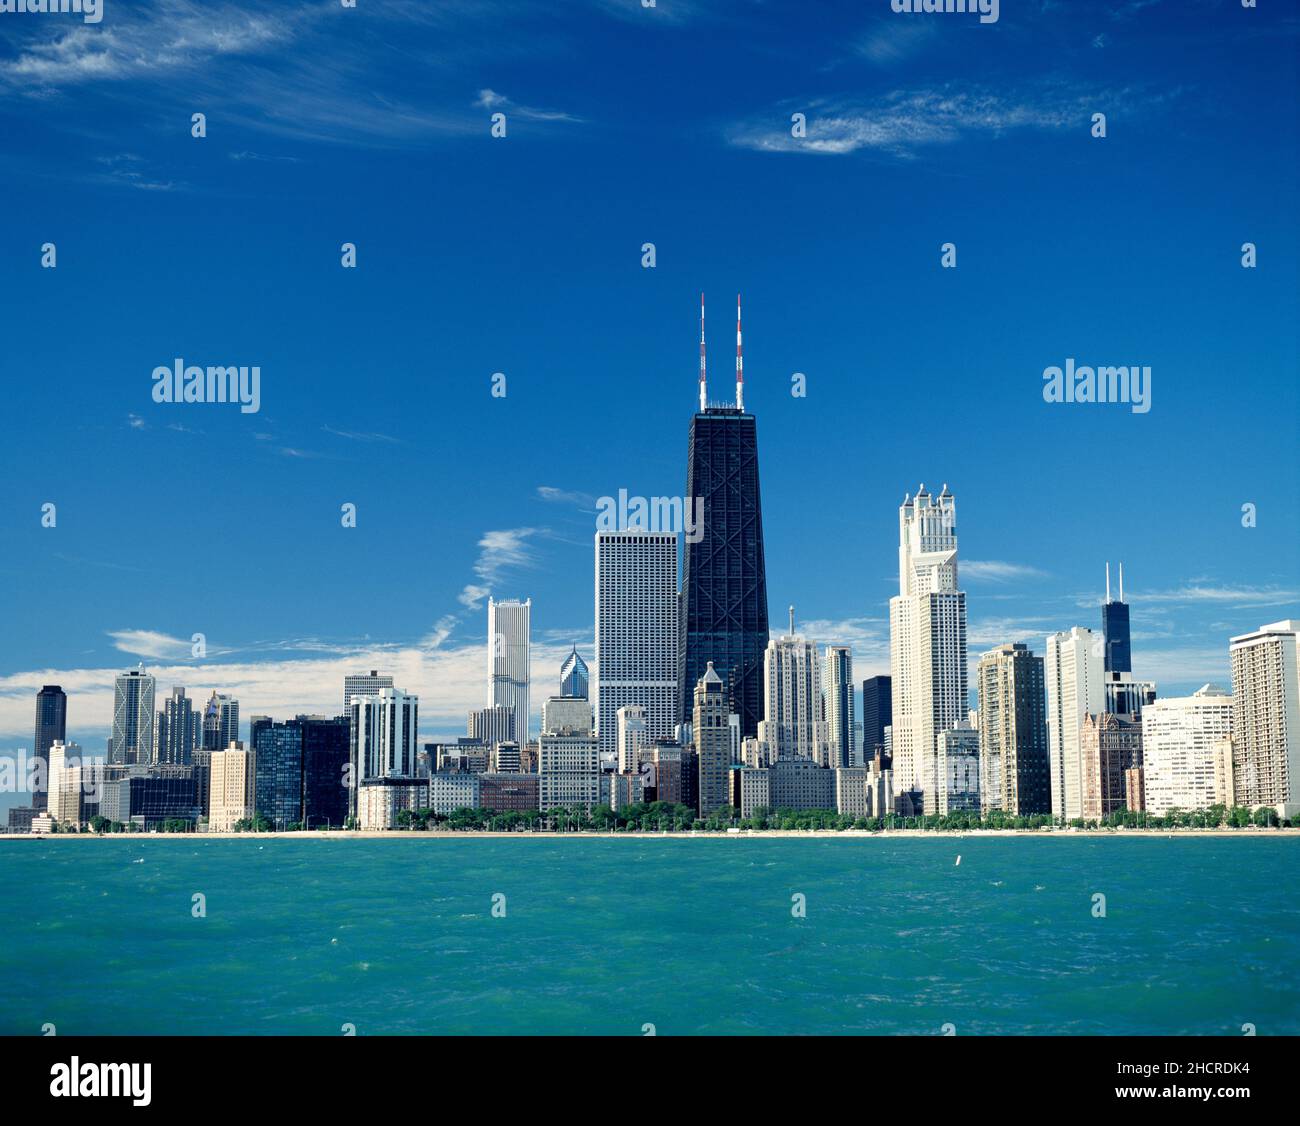 United States. Illinois. Chicago. City skyline from Lake Michigan. Stock Photo